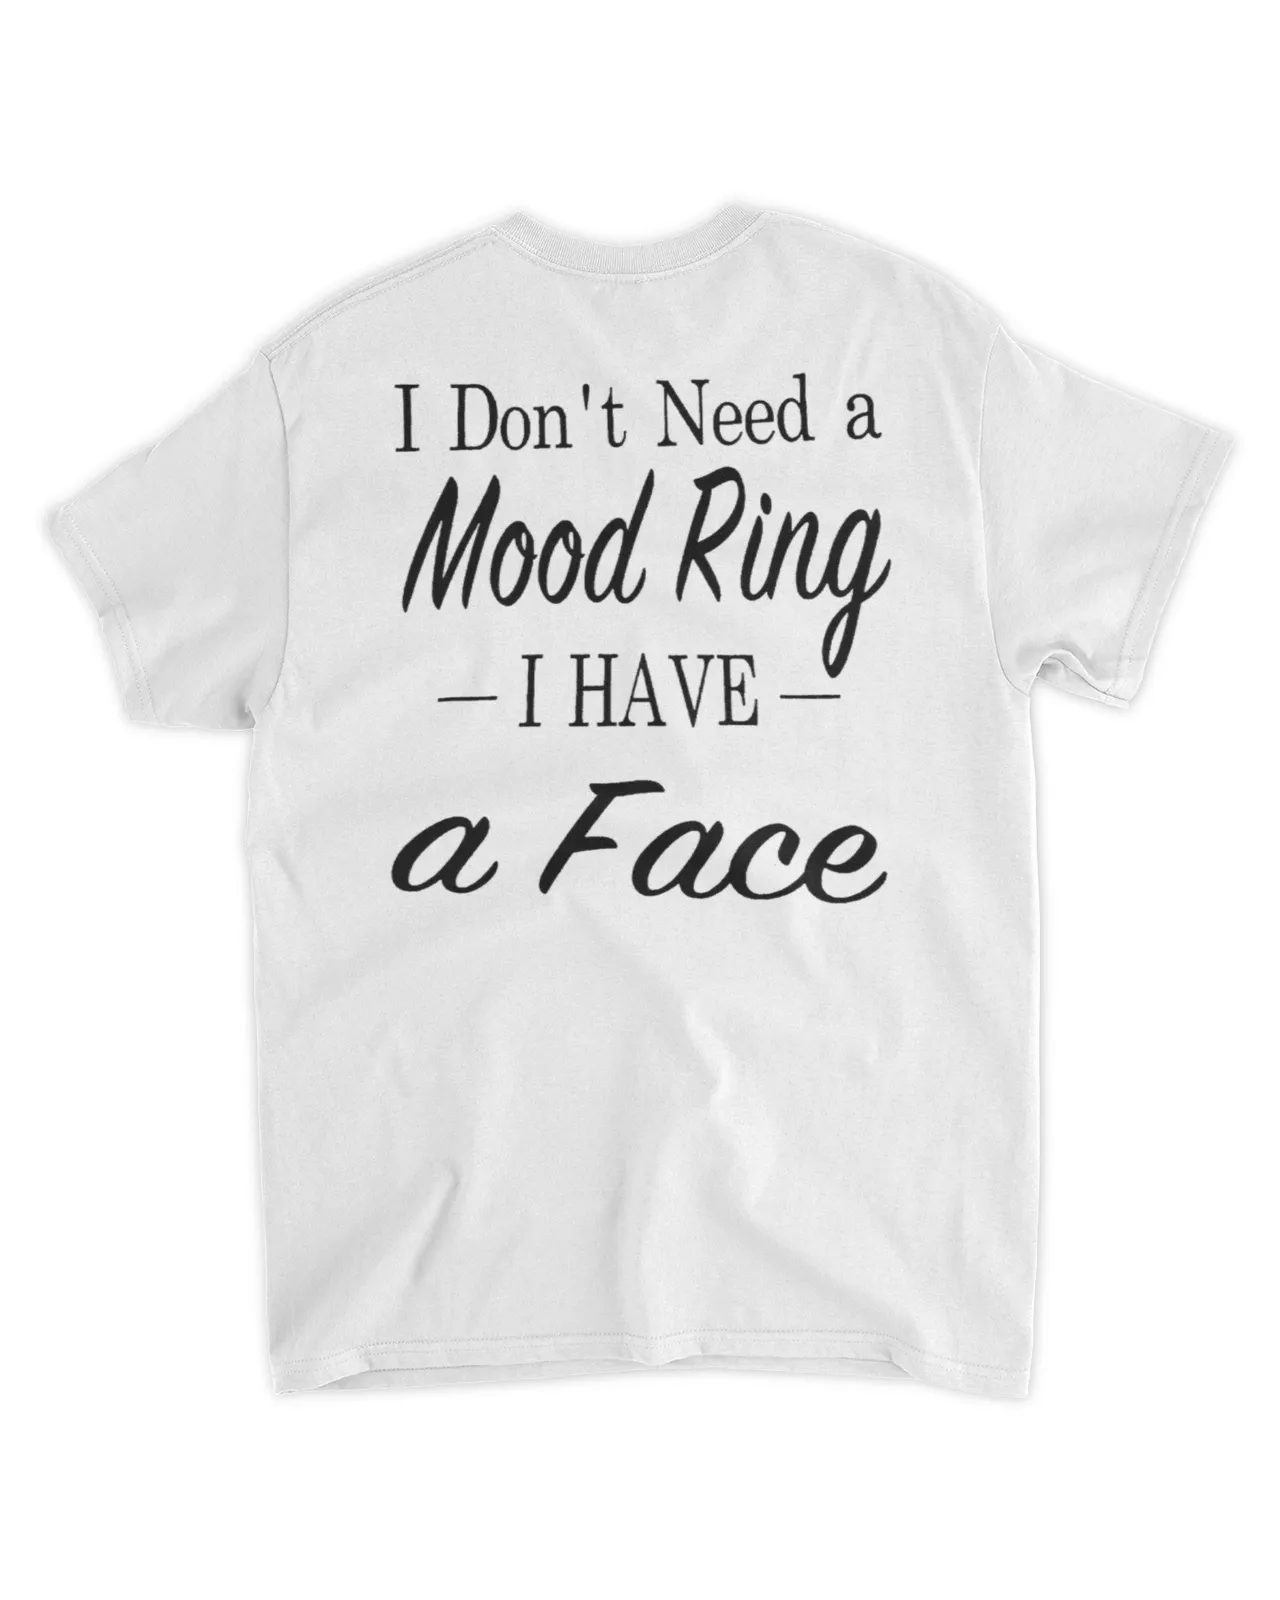  I don't need a mood ring I have a face shirt